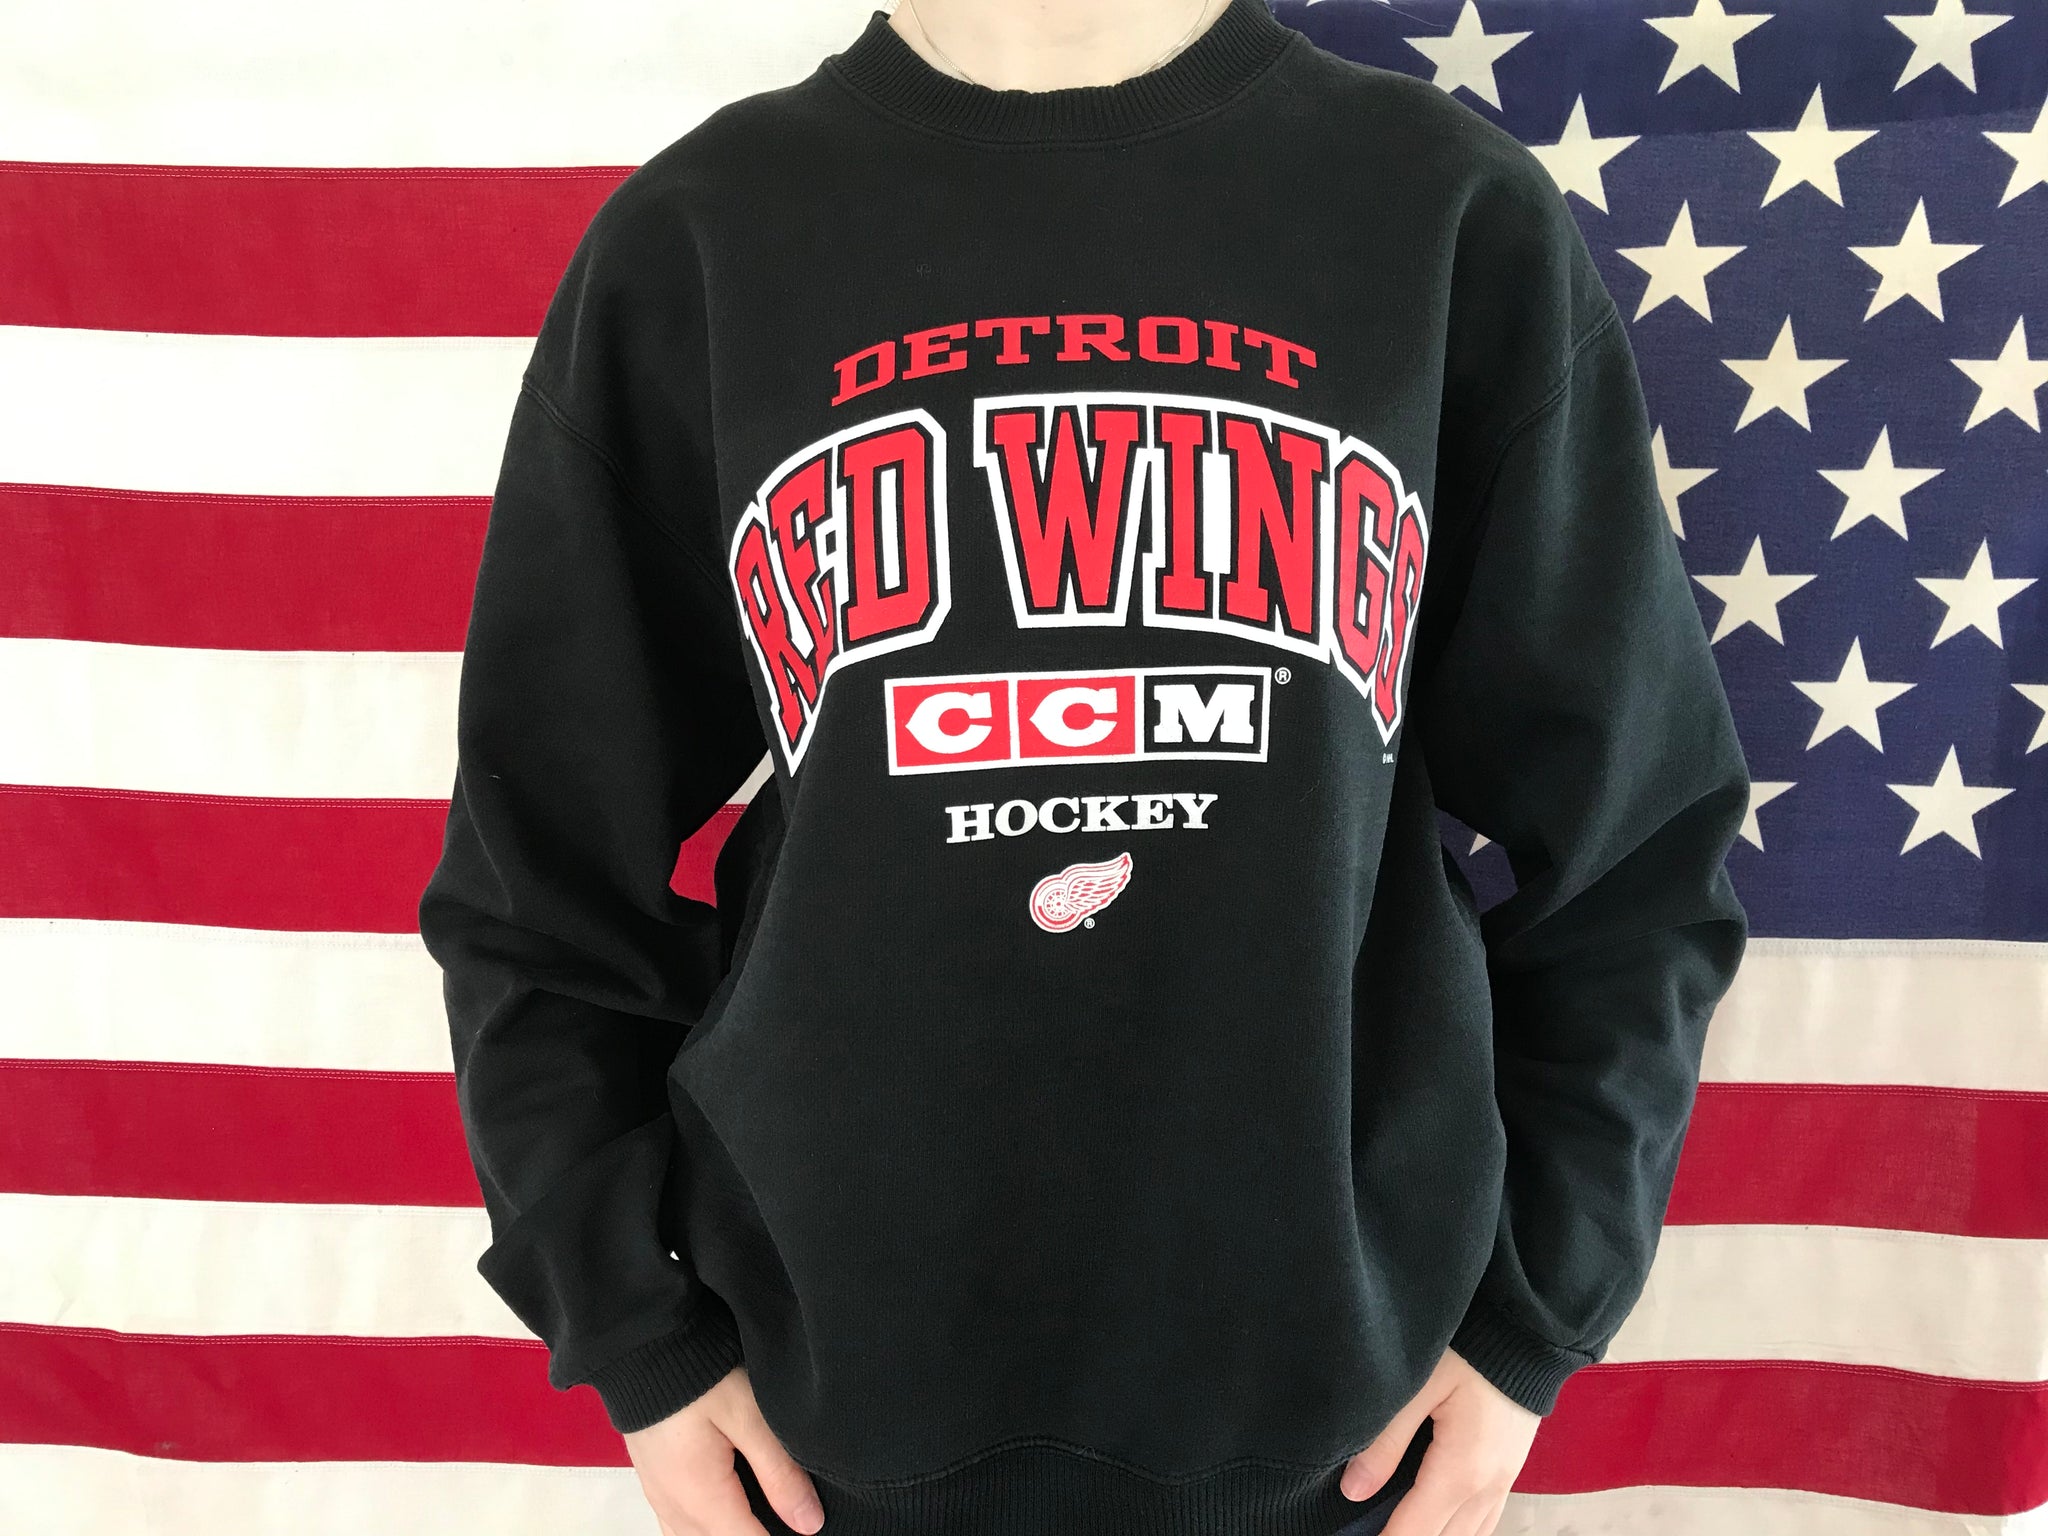 Men's Detroit Red Wings Gear & Hockey Gifts, Men's Red Wings